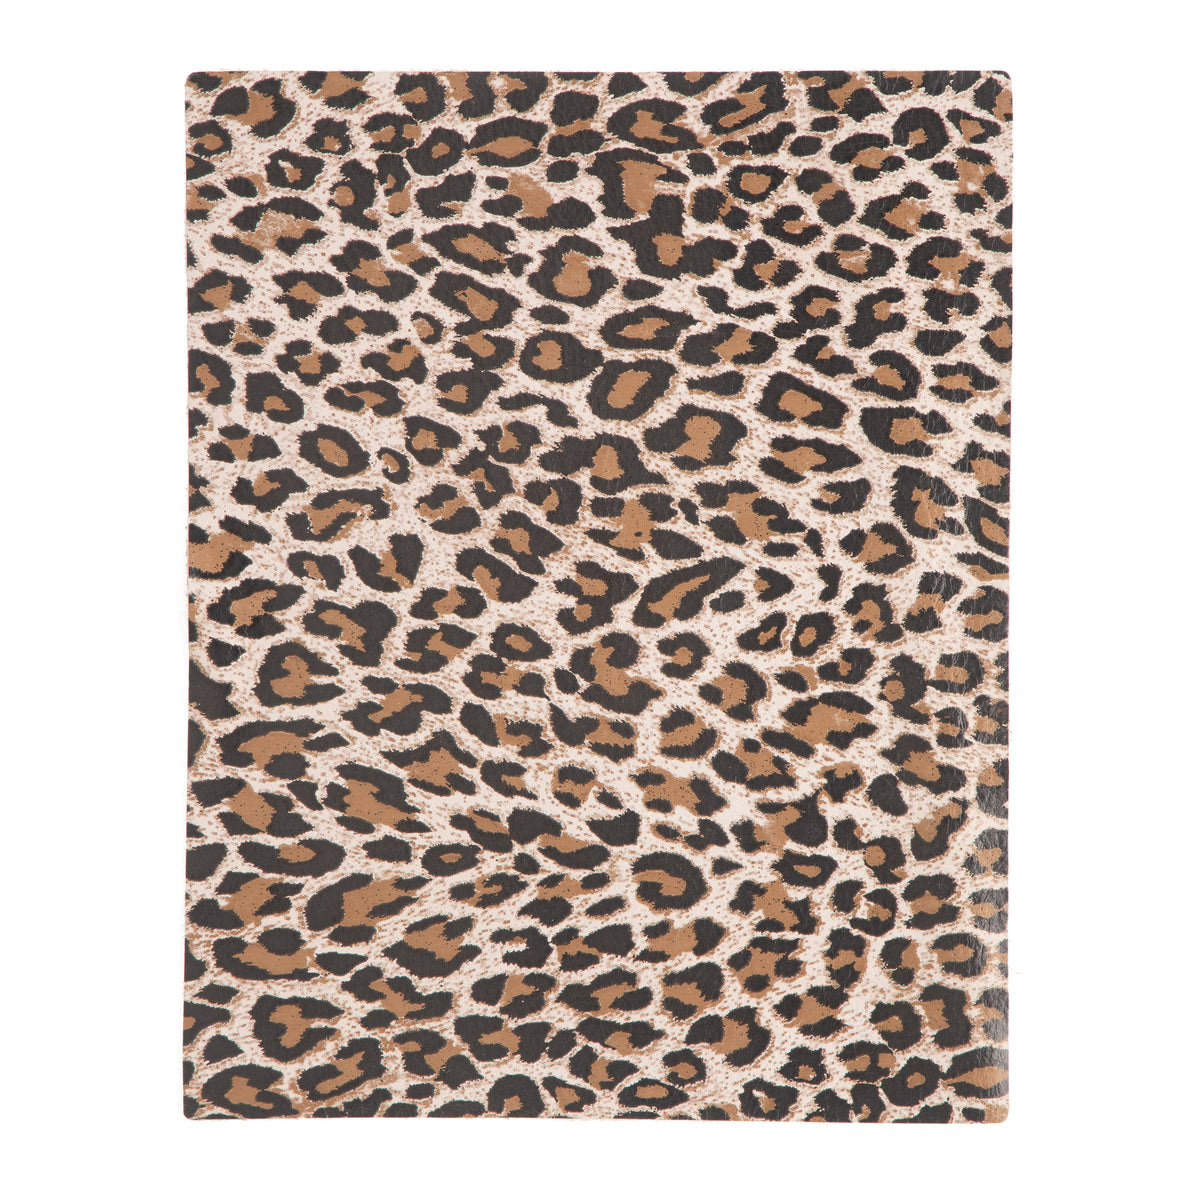 Leopard Print Nubuck Cow Leather 3oz